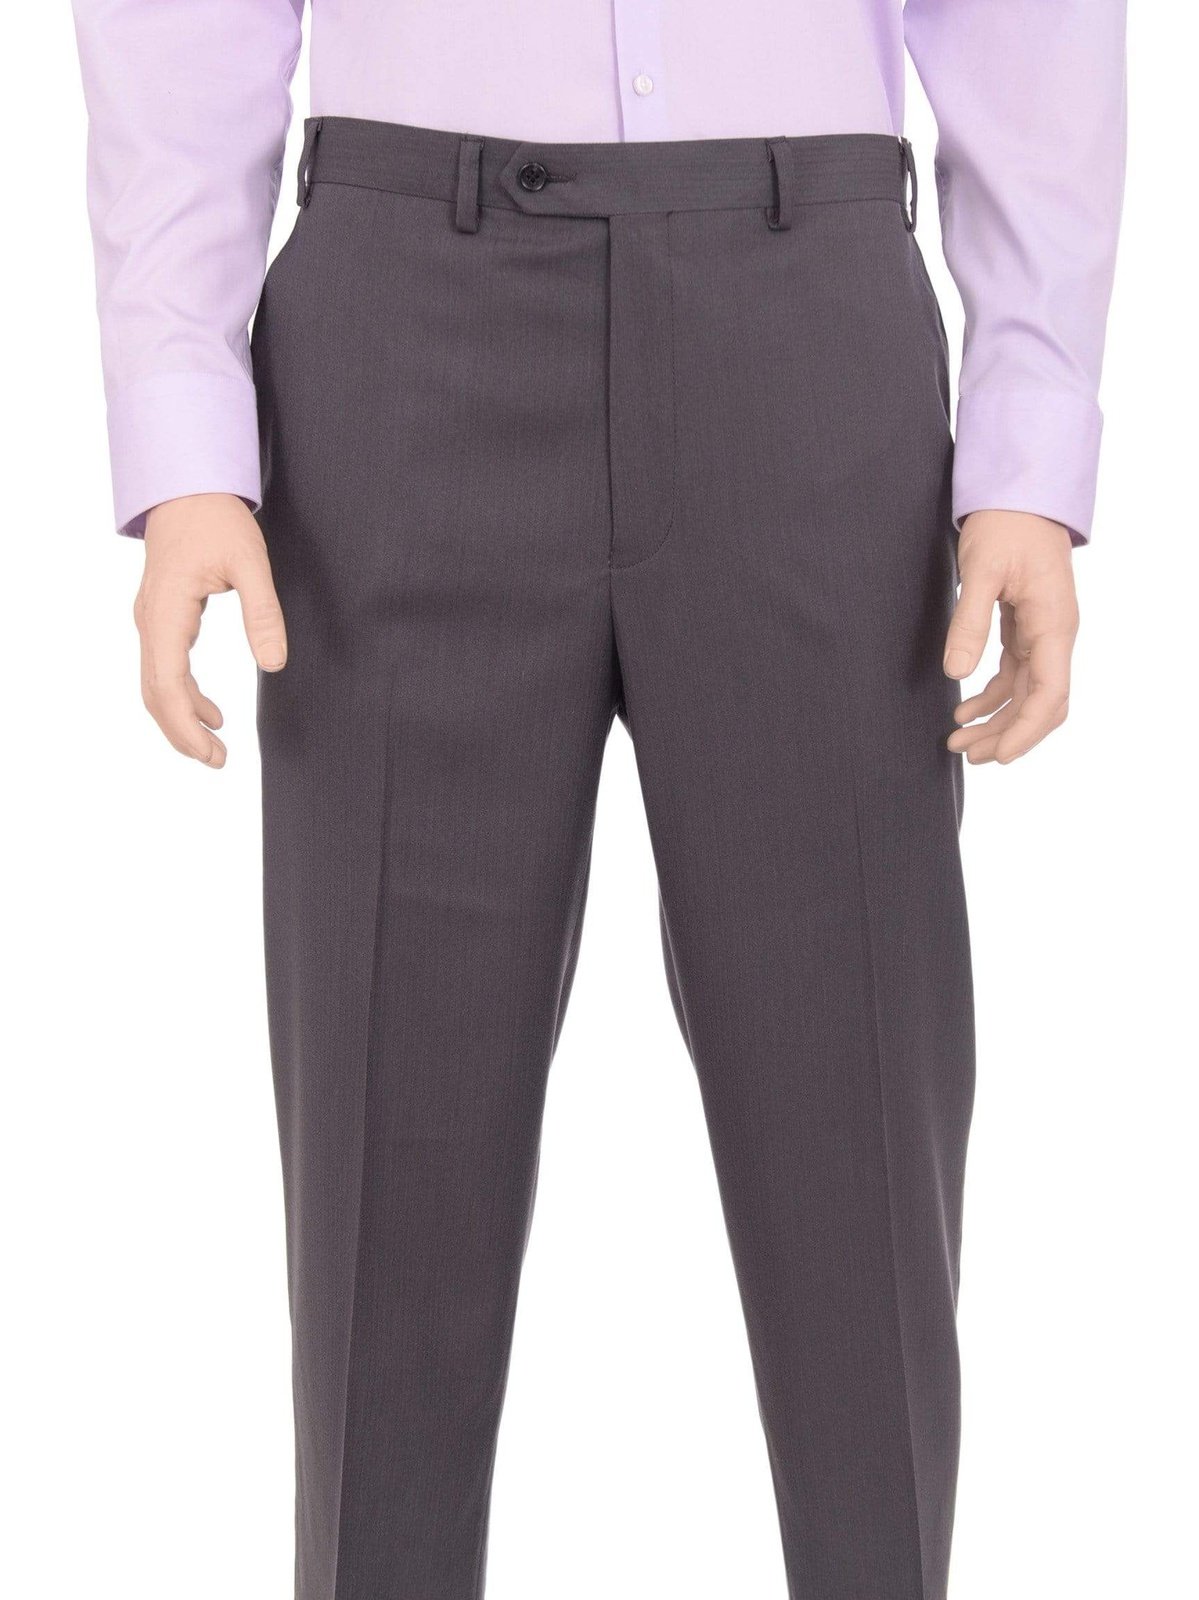 Michael Kors PANTS 36 / 32 / 36X32 Michael Kors Regular Fit Gray Herringbone Flat Front Washable Stretch Pants